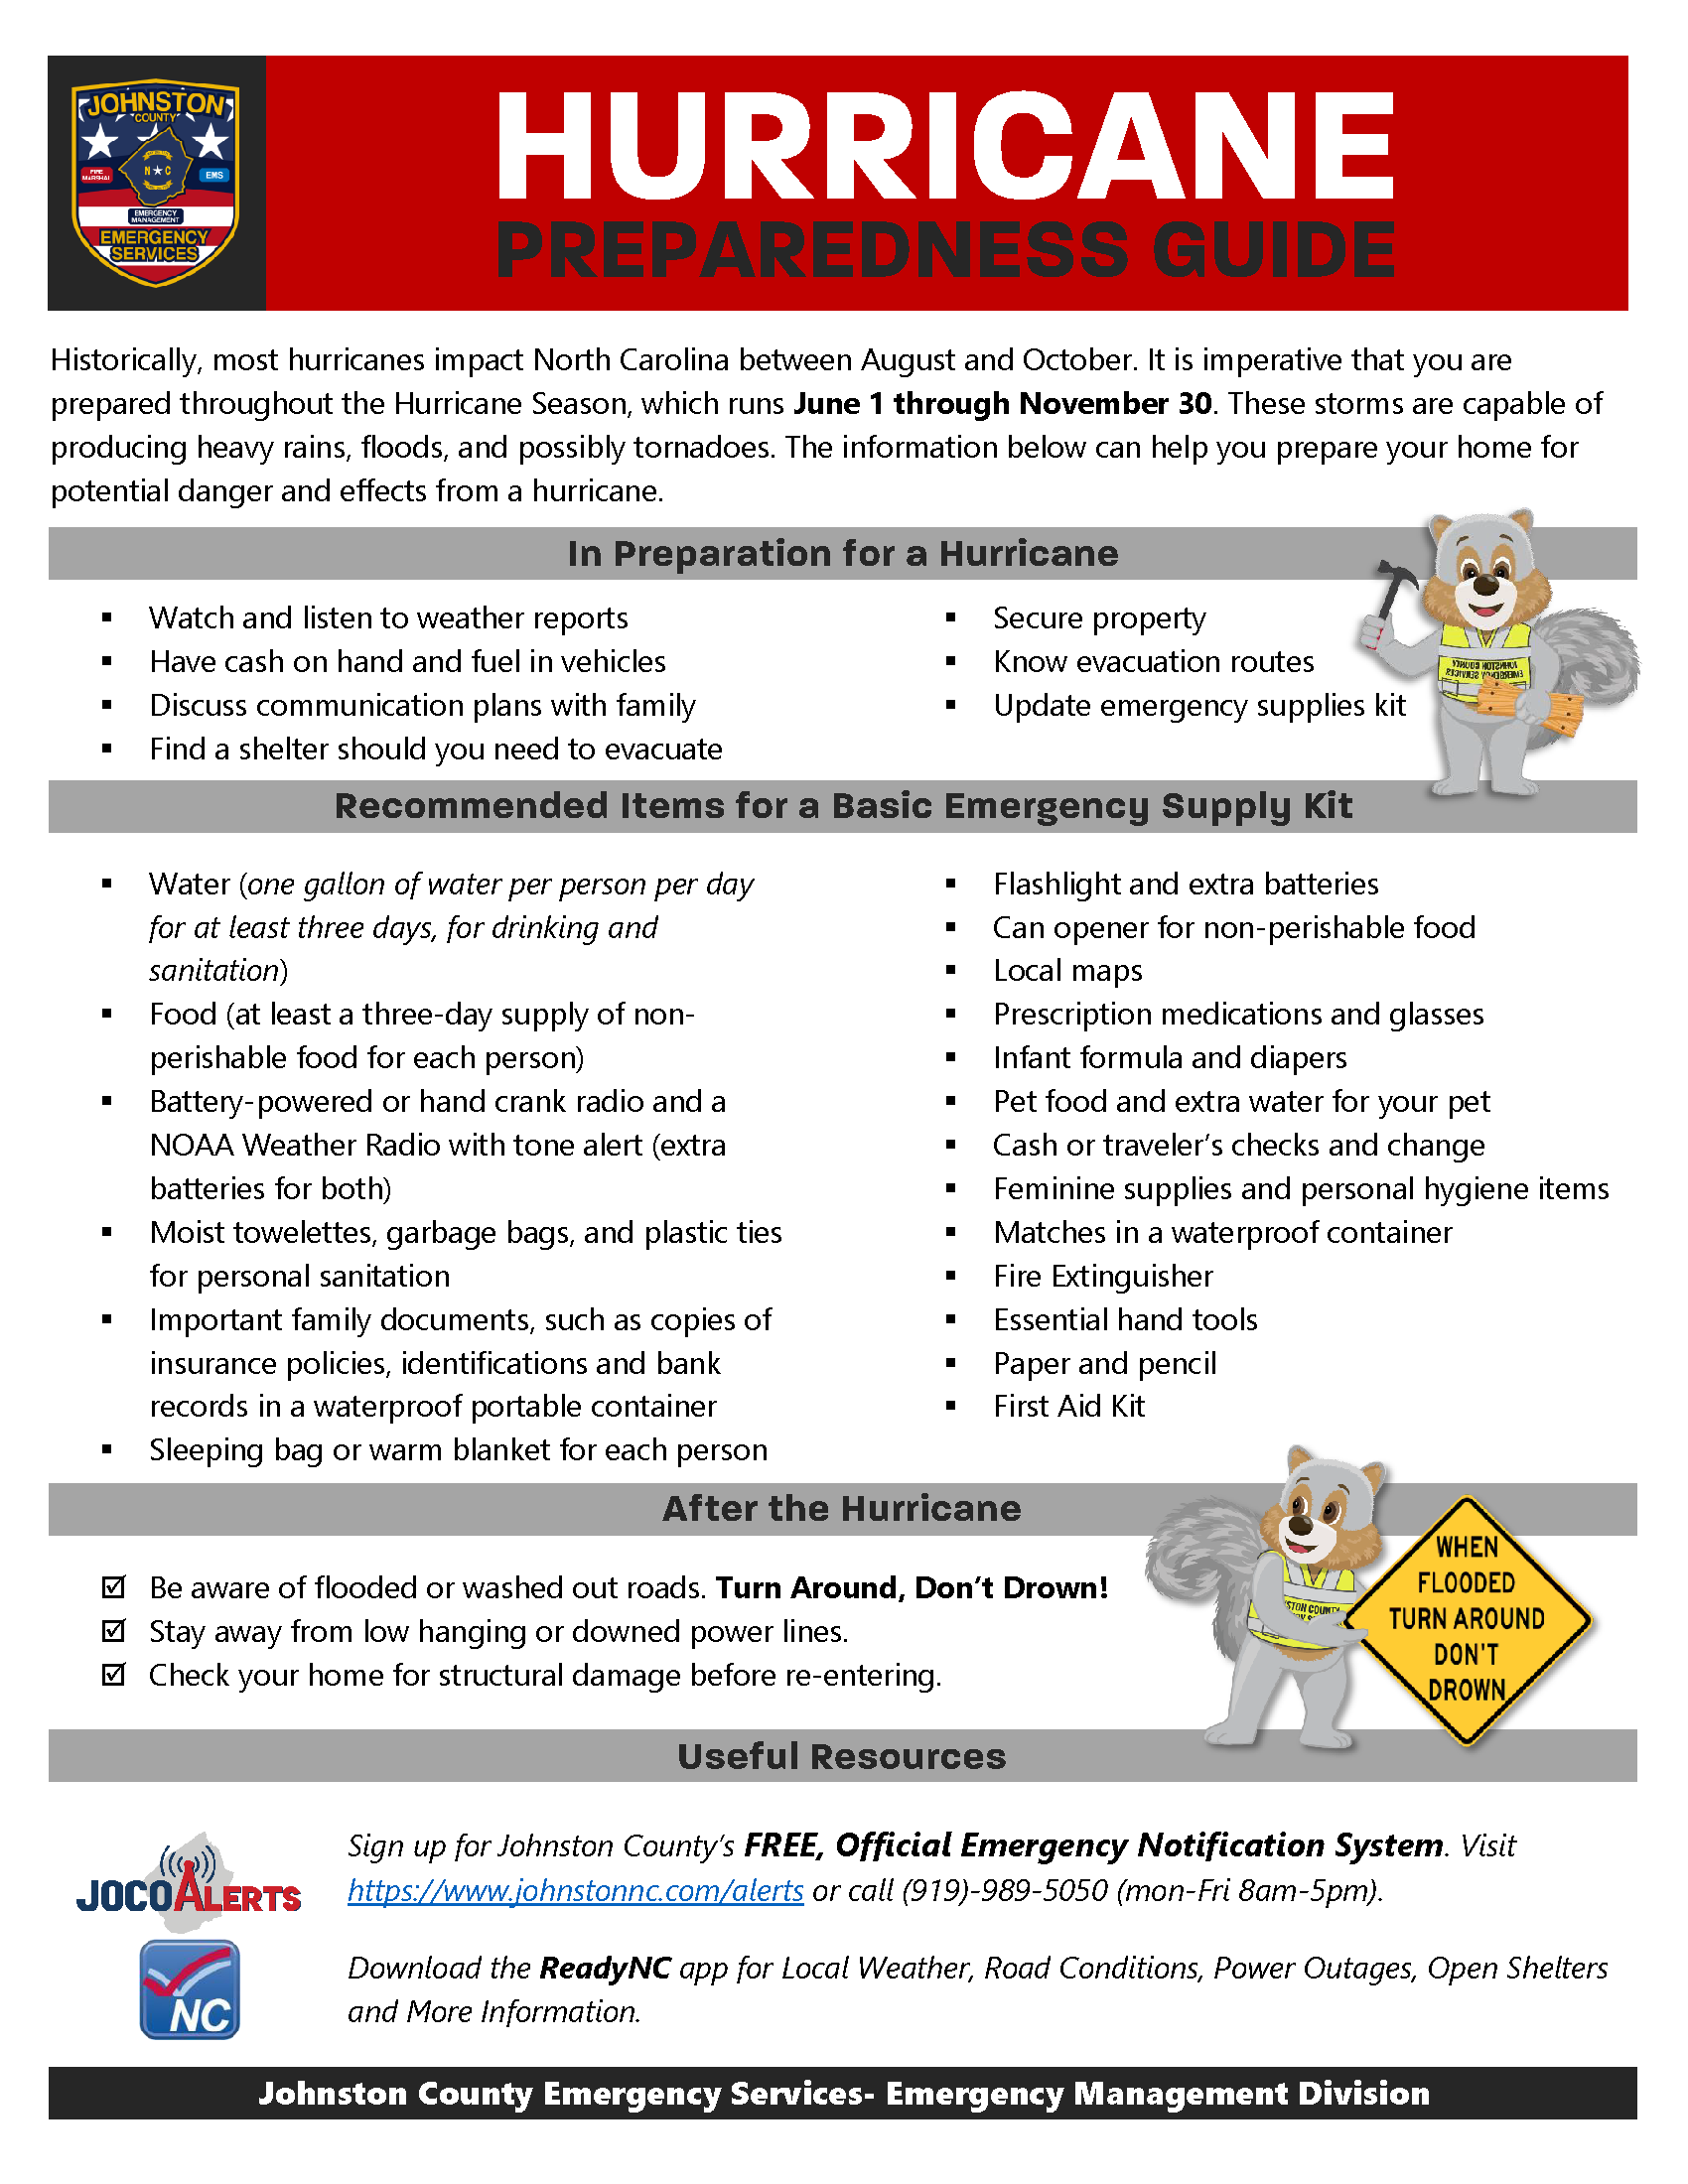 Preparedness Info EM Division JoCo Emergency Services